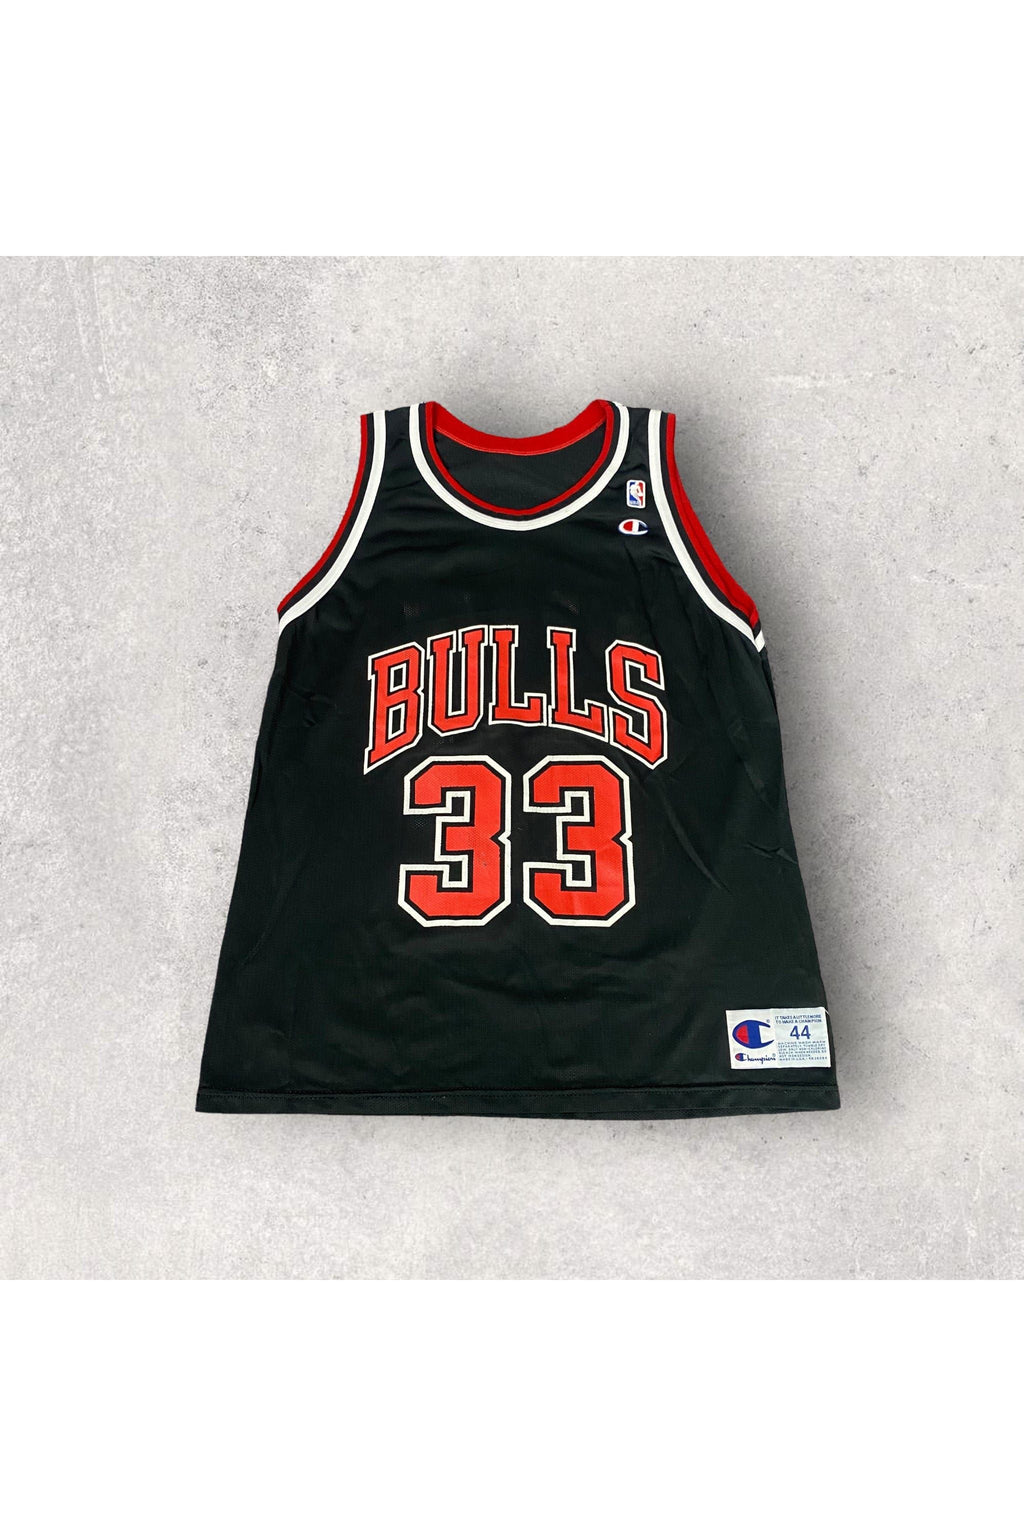 Vintage Champion Scottie Pippen Chicago Bulls Jersey- SZ 44